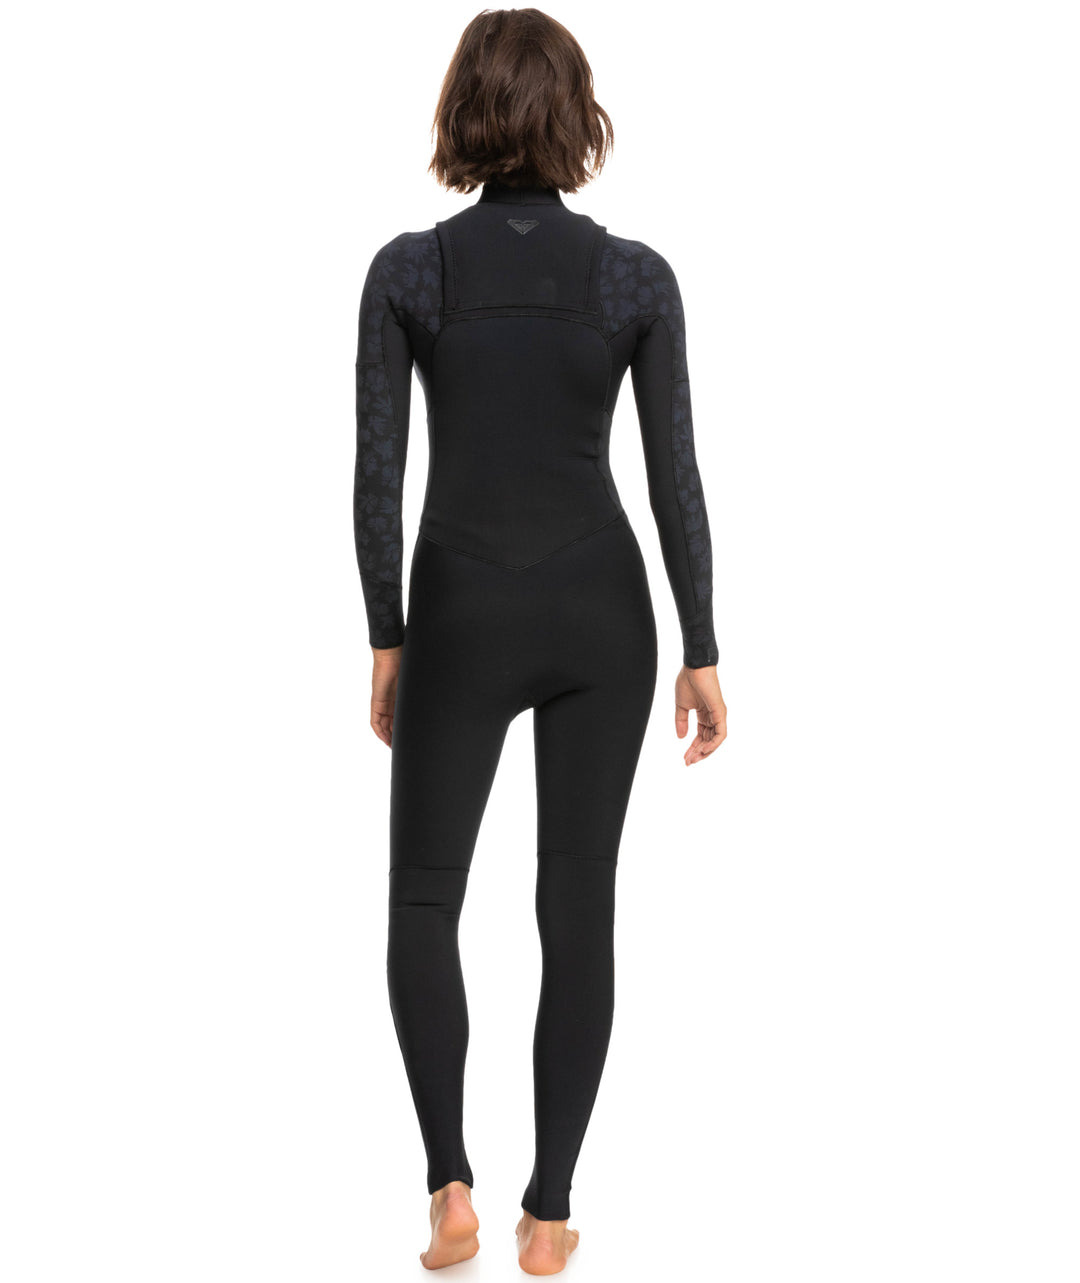 Swell Series 3/2 Front Zip GBS Steamer Wetsuit - Black